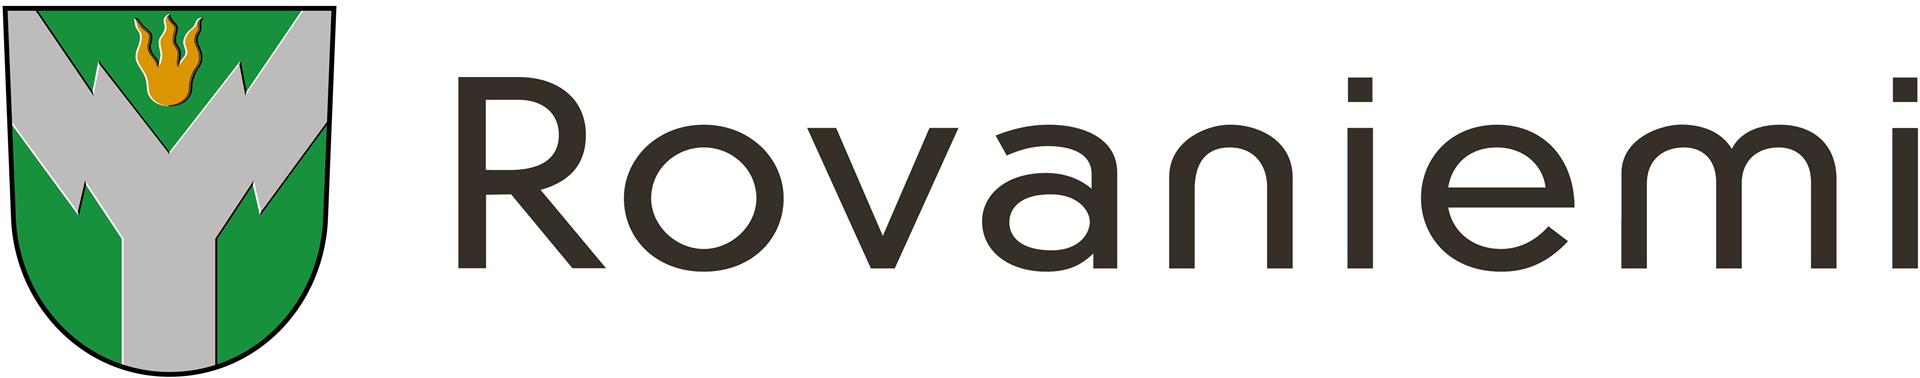 Rovaniemi_logo.jpg